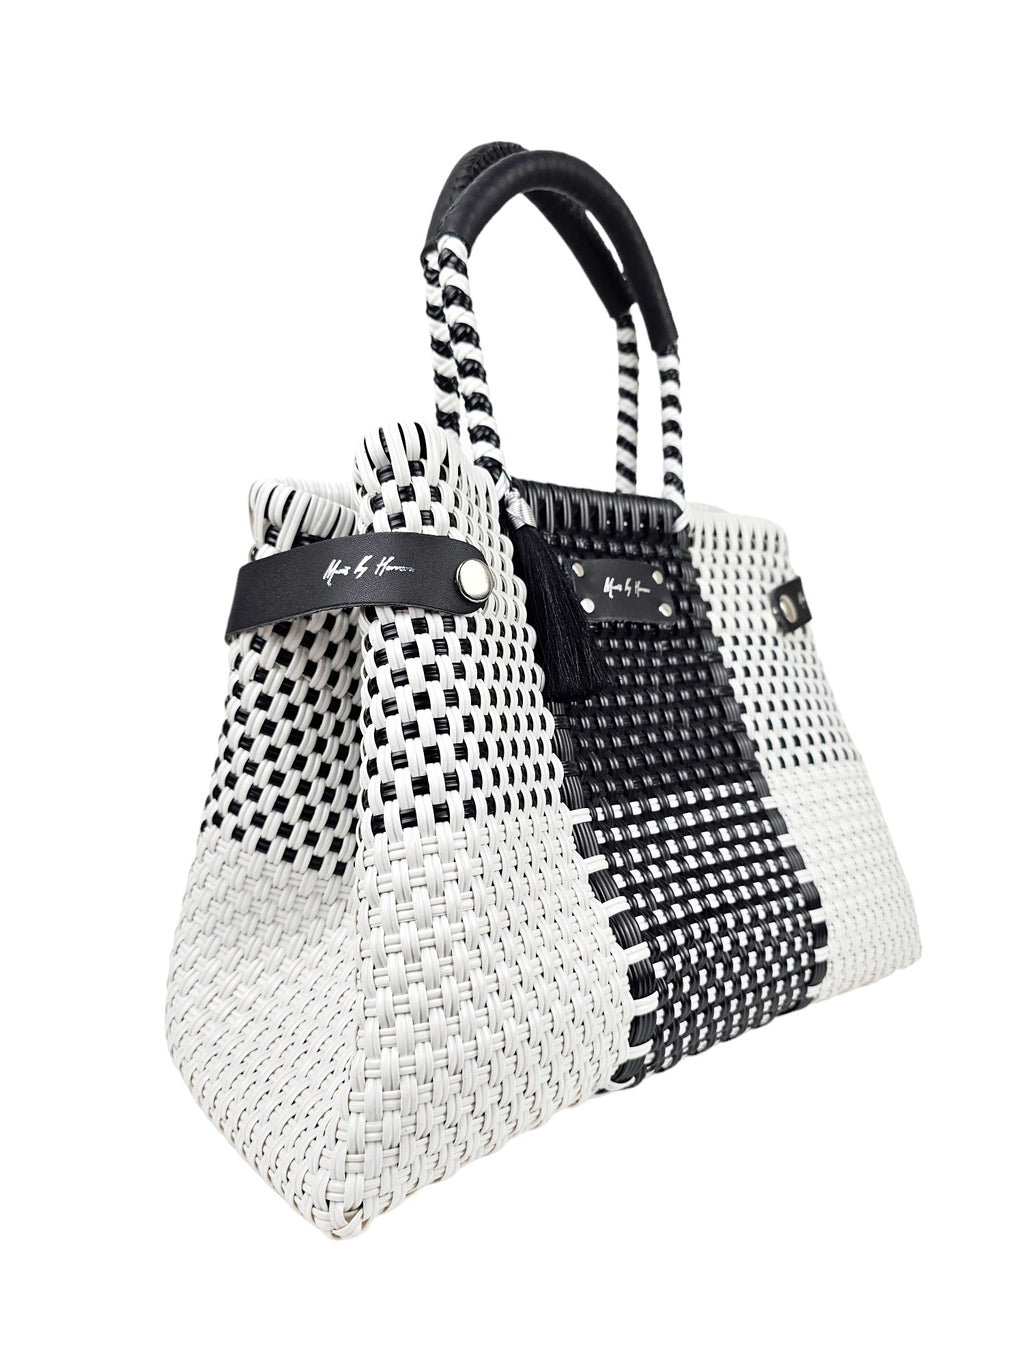 Luxury Sustainable Women's Handbags - Mavis by Herrera